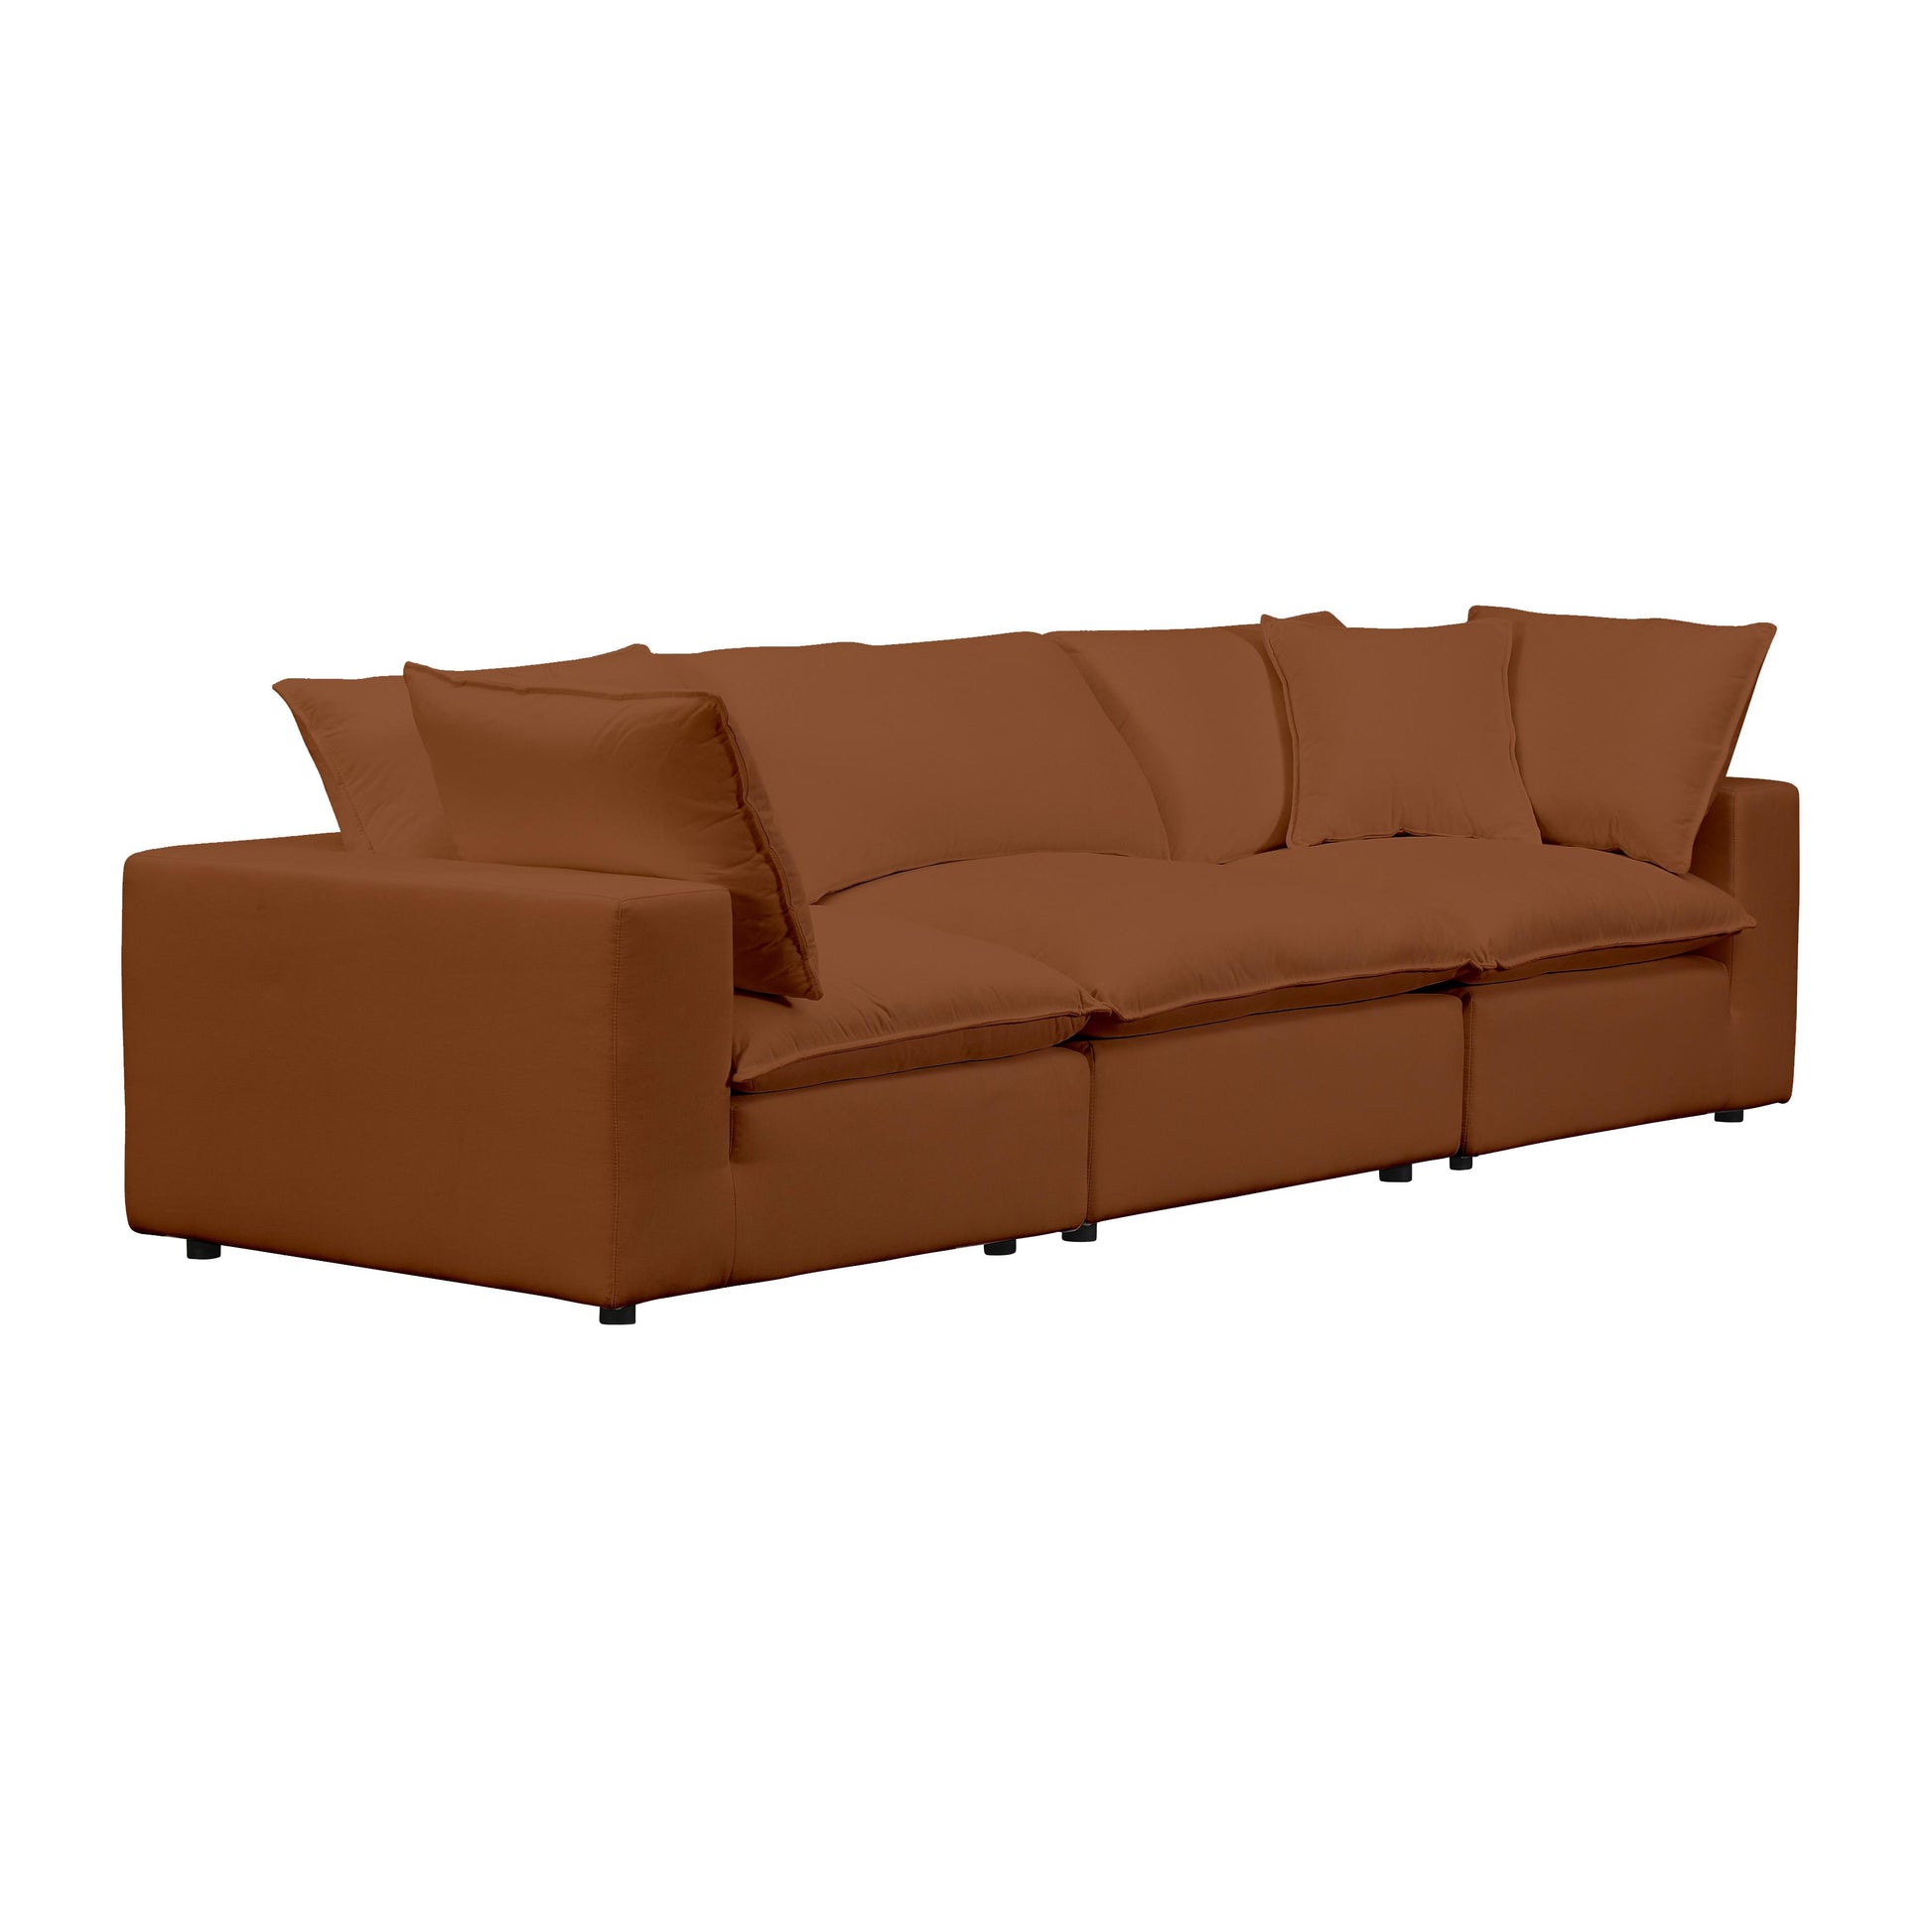 Cali Rust Modular Sofa by TOV